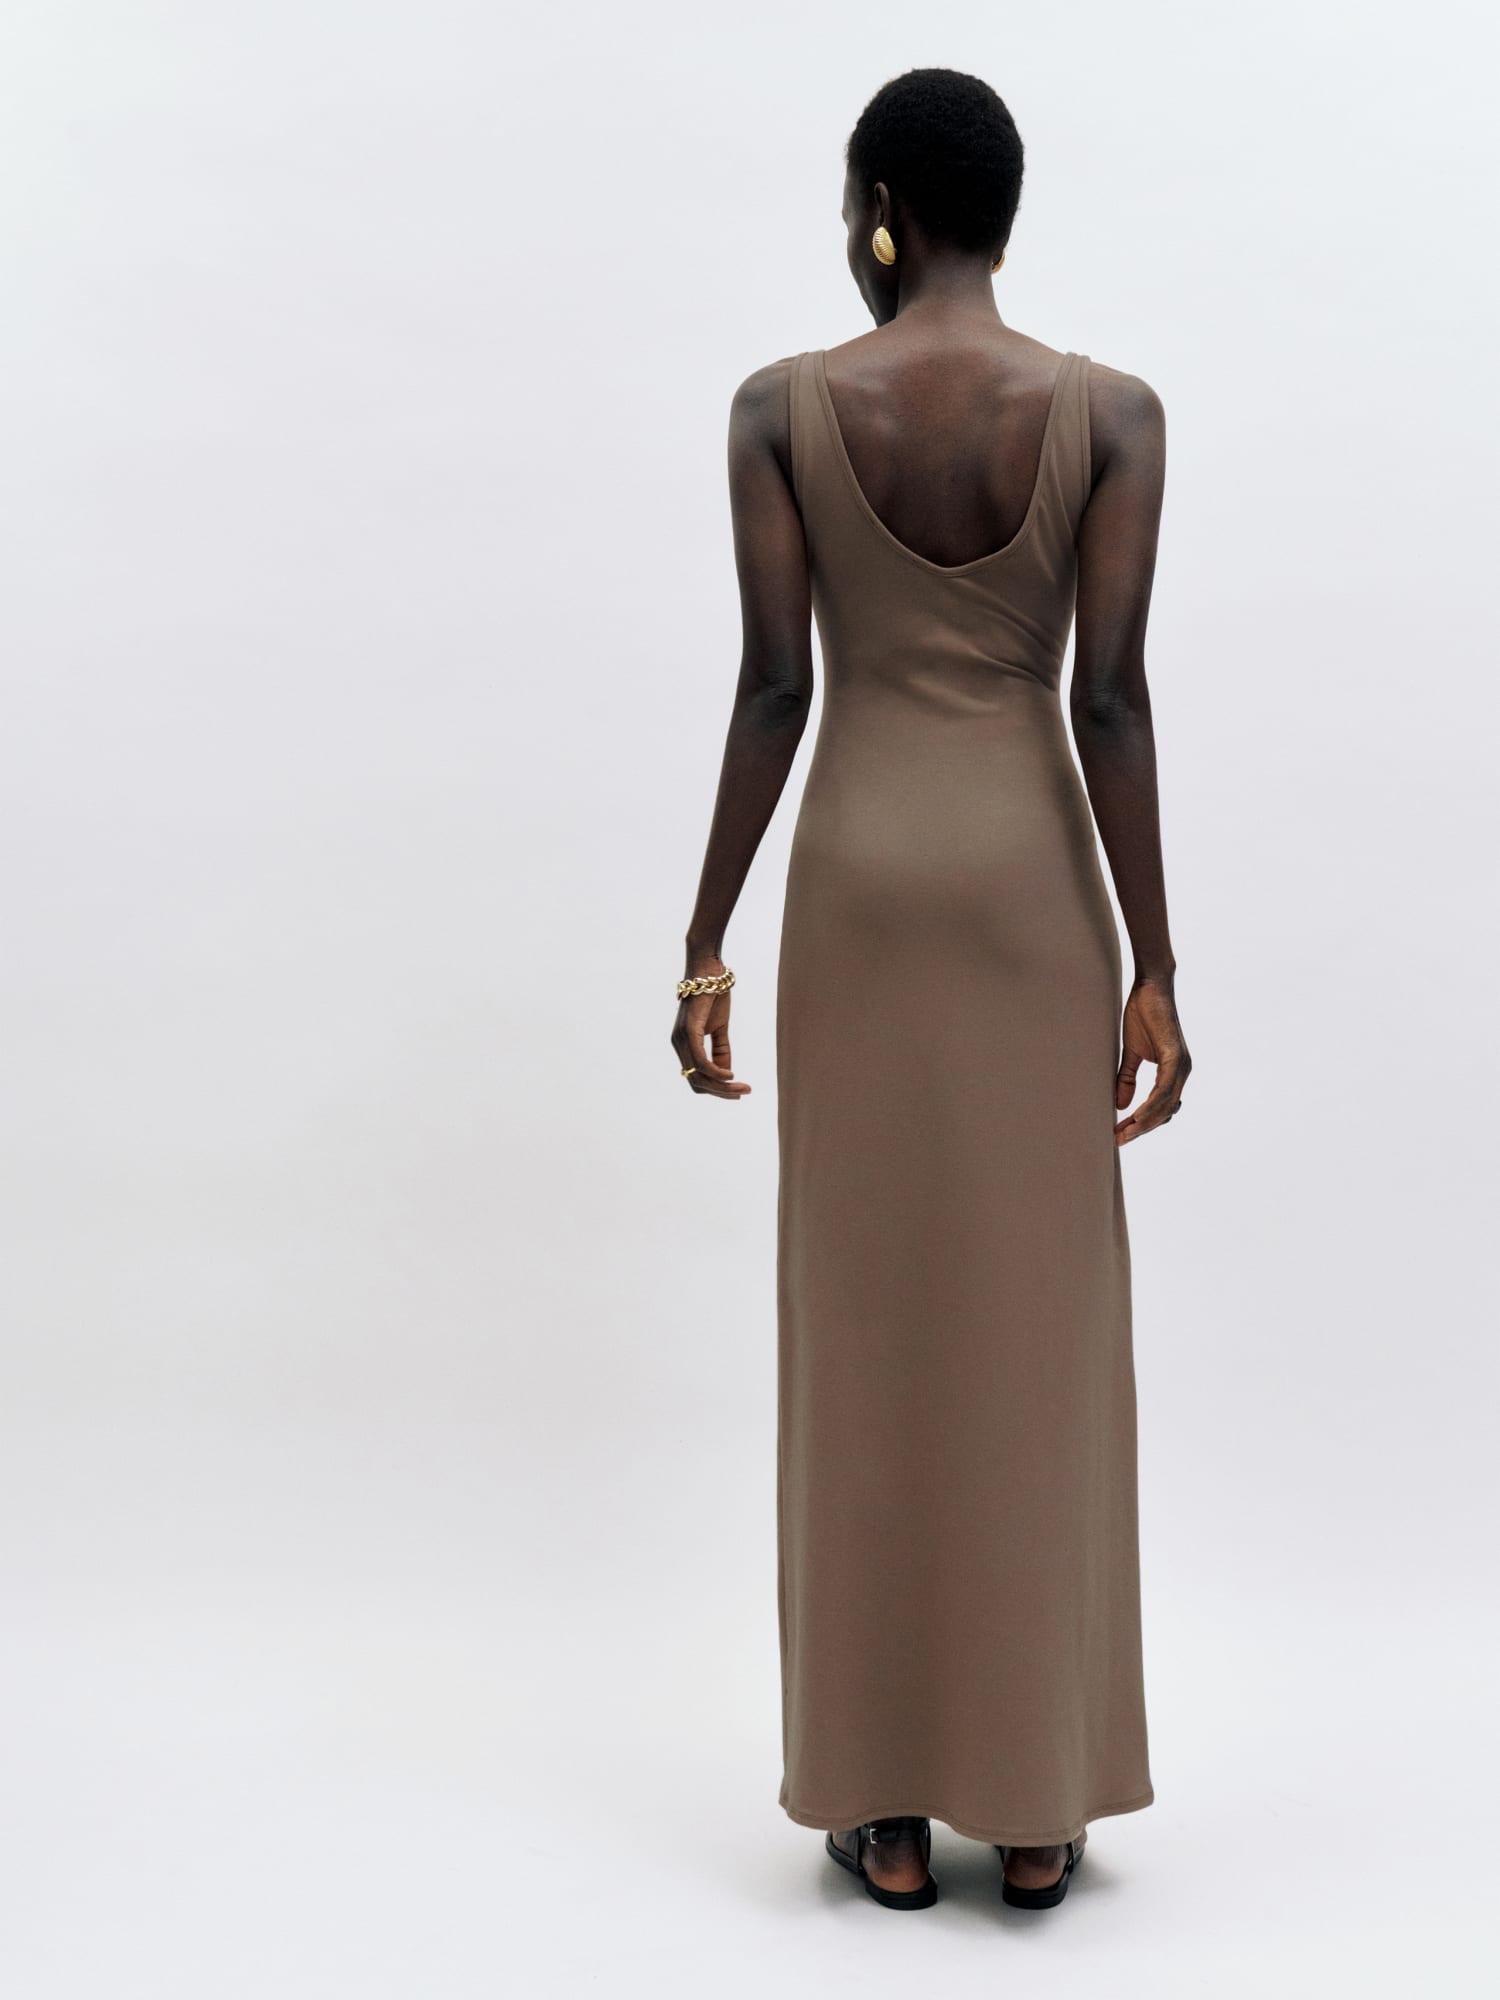 Tyra Knit Dress Maxi/Long | Reformation